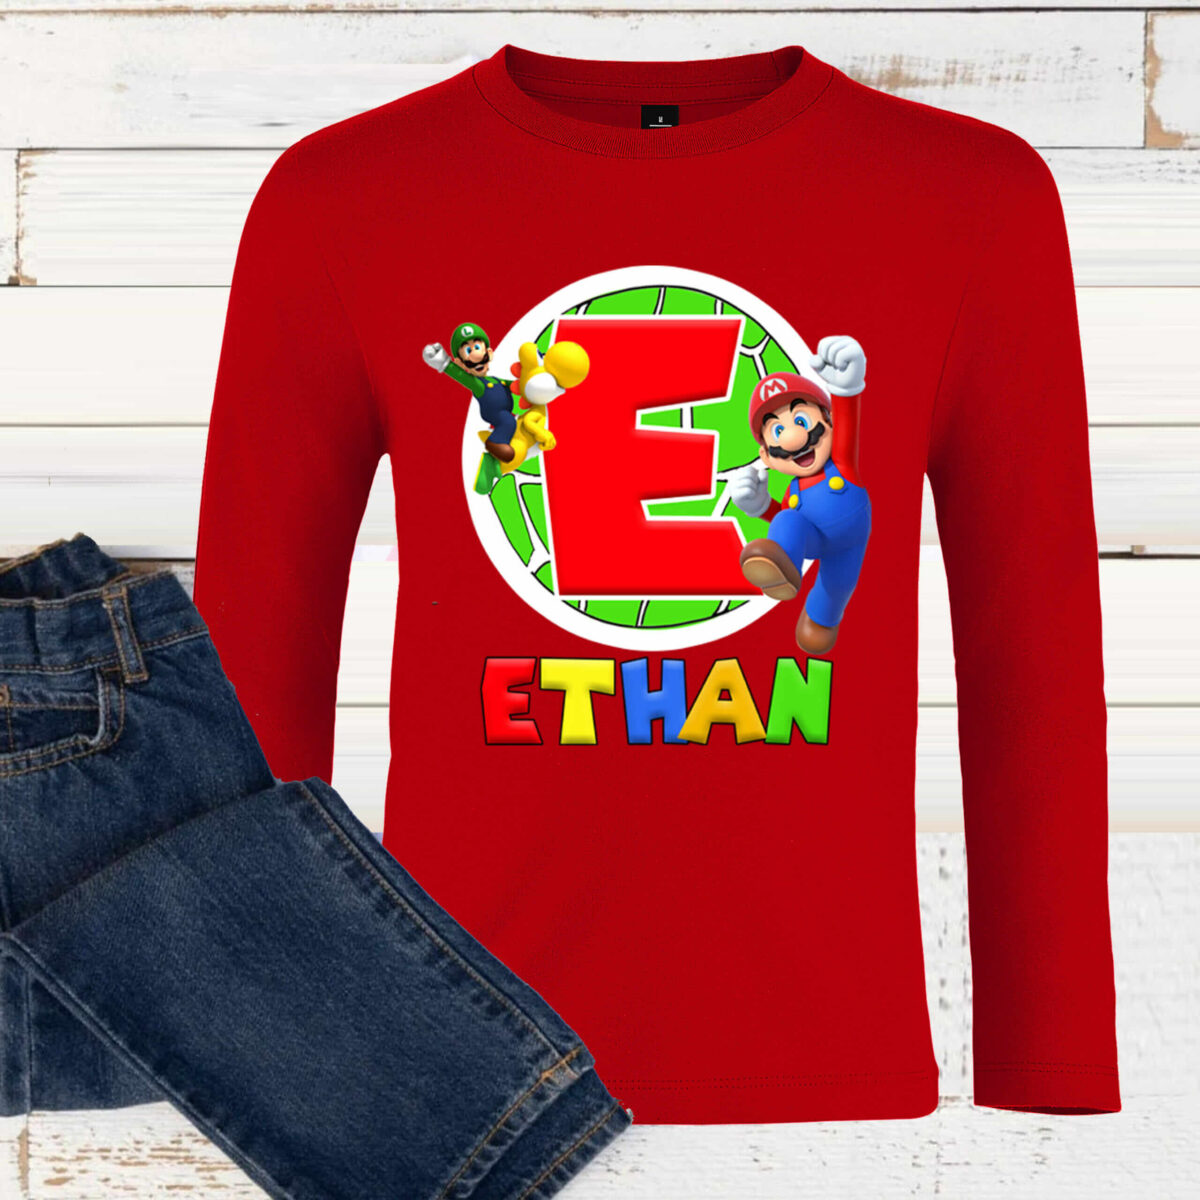 T-shirt Super Mario Bros prénom et initiale